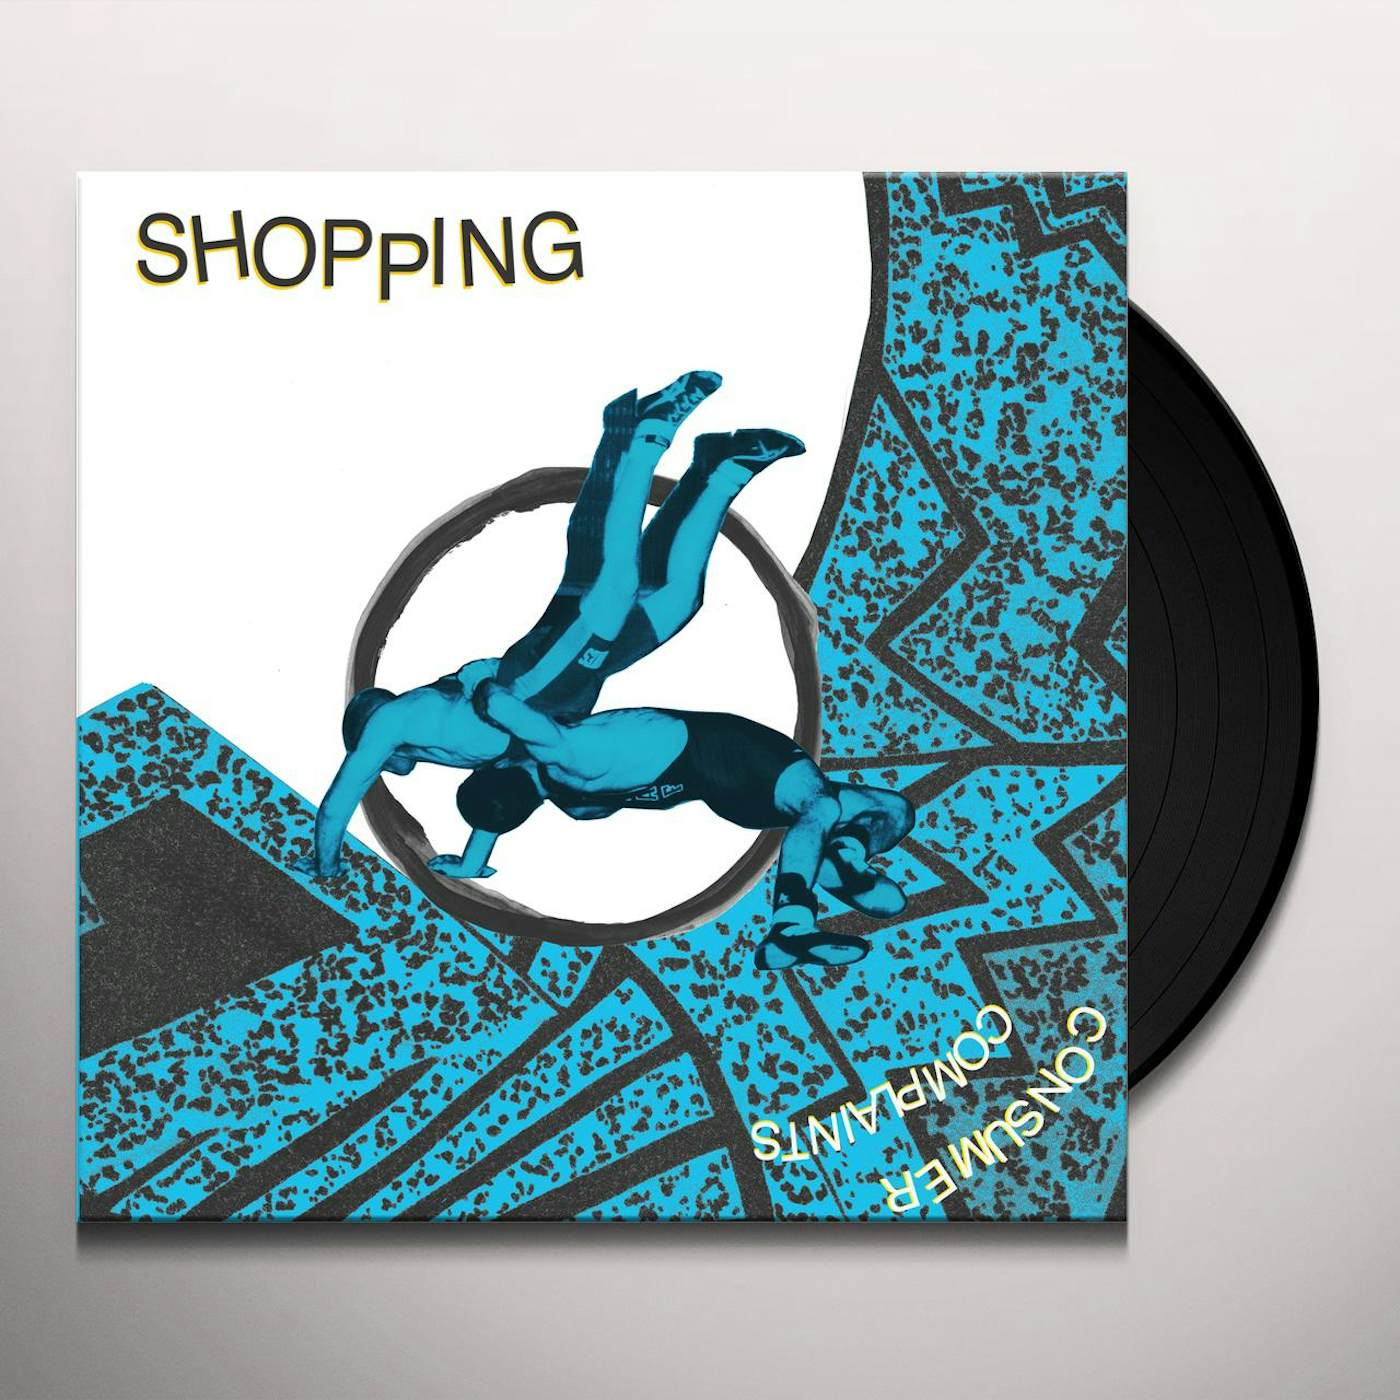 Shopping Consumer Complaints Vinyl Record